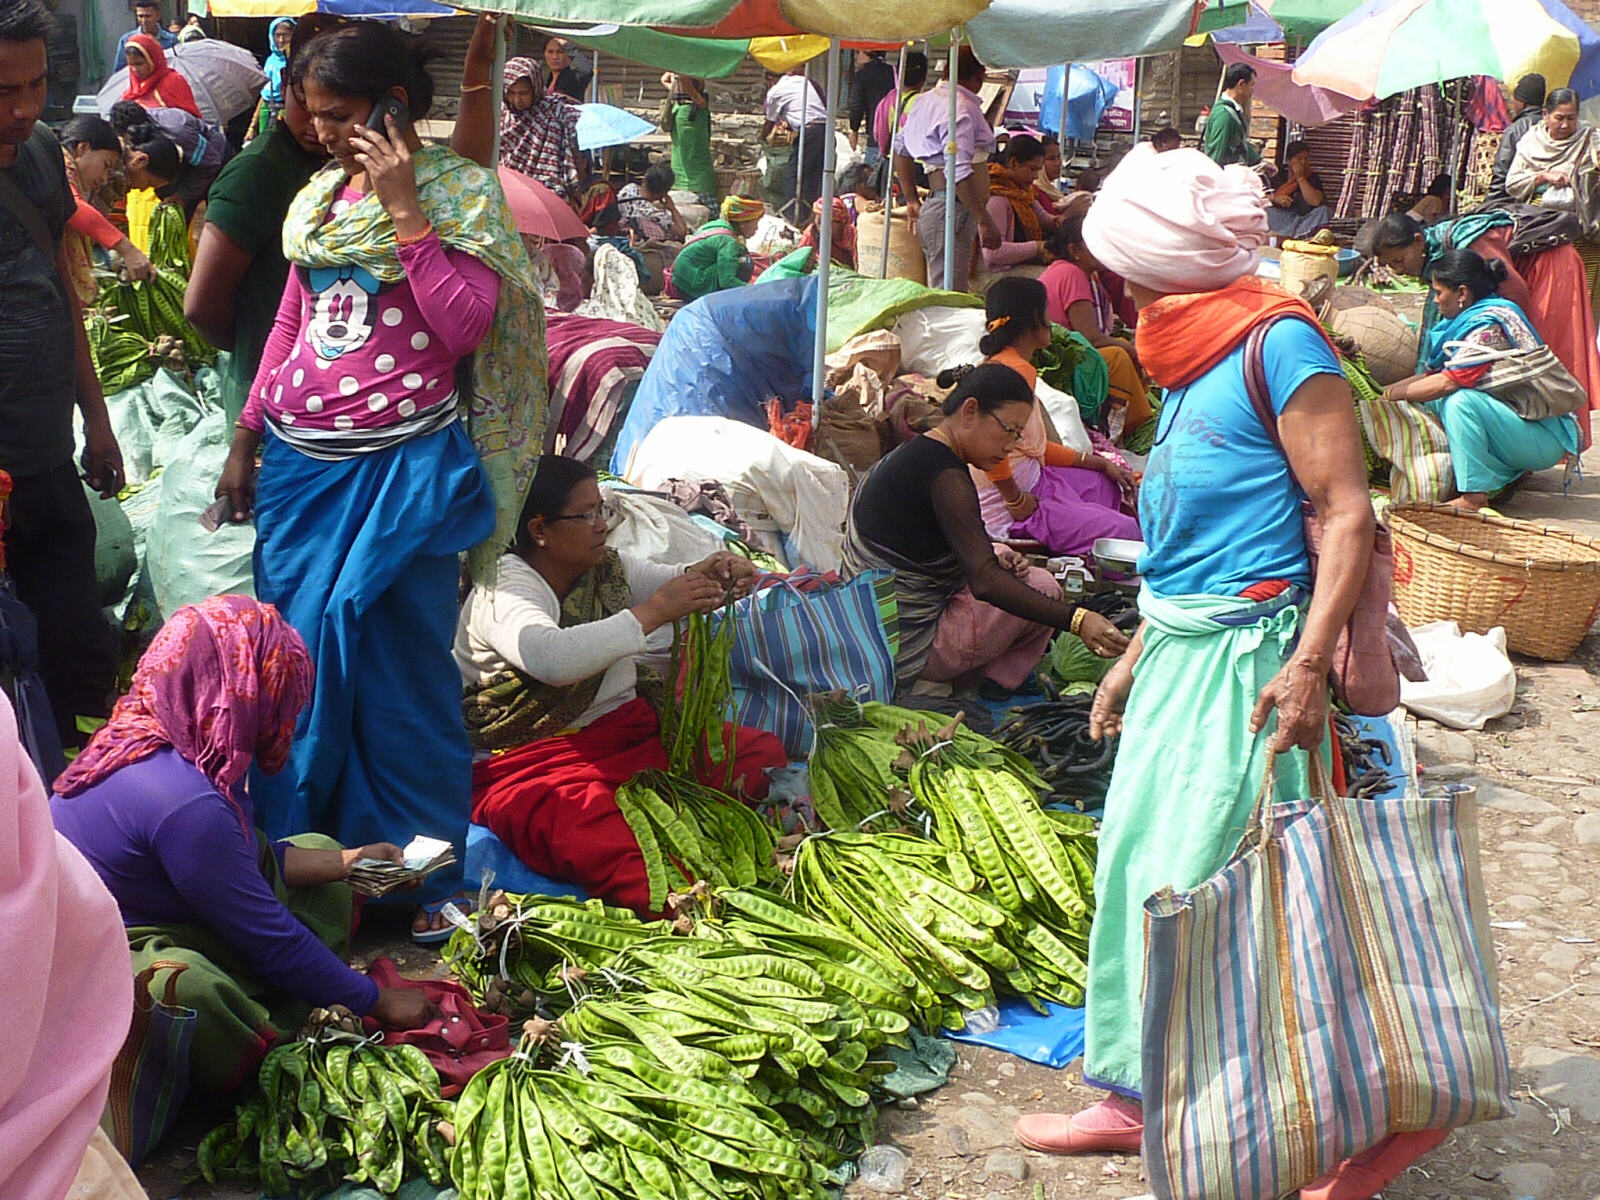 Ima market (Women's market) in Imphal, Manipur state